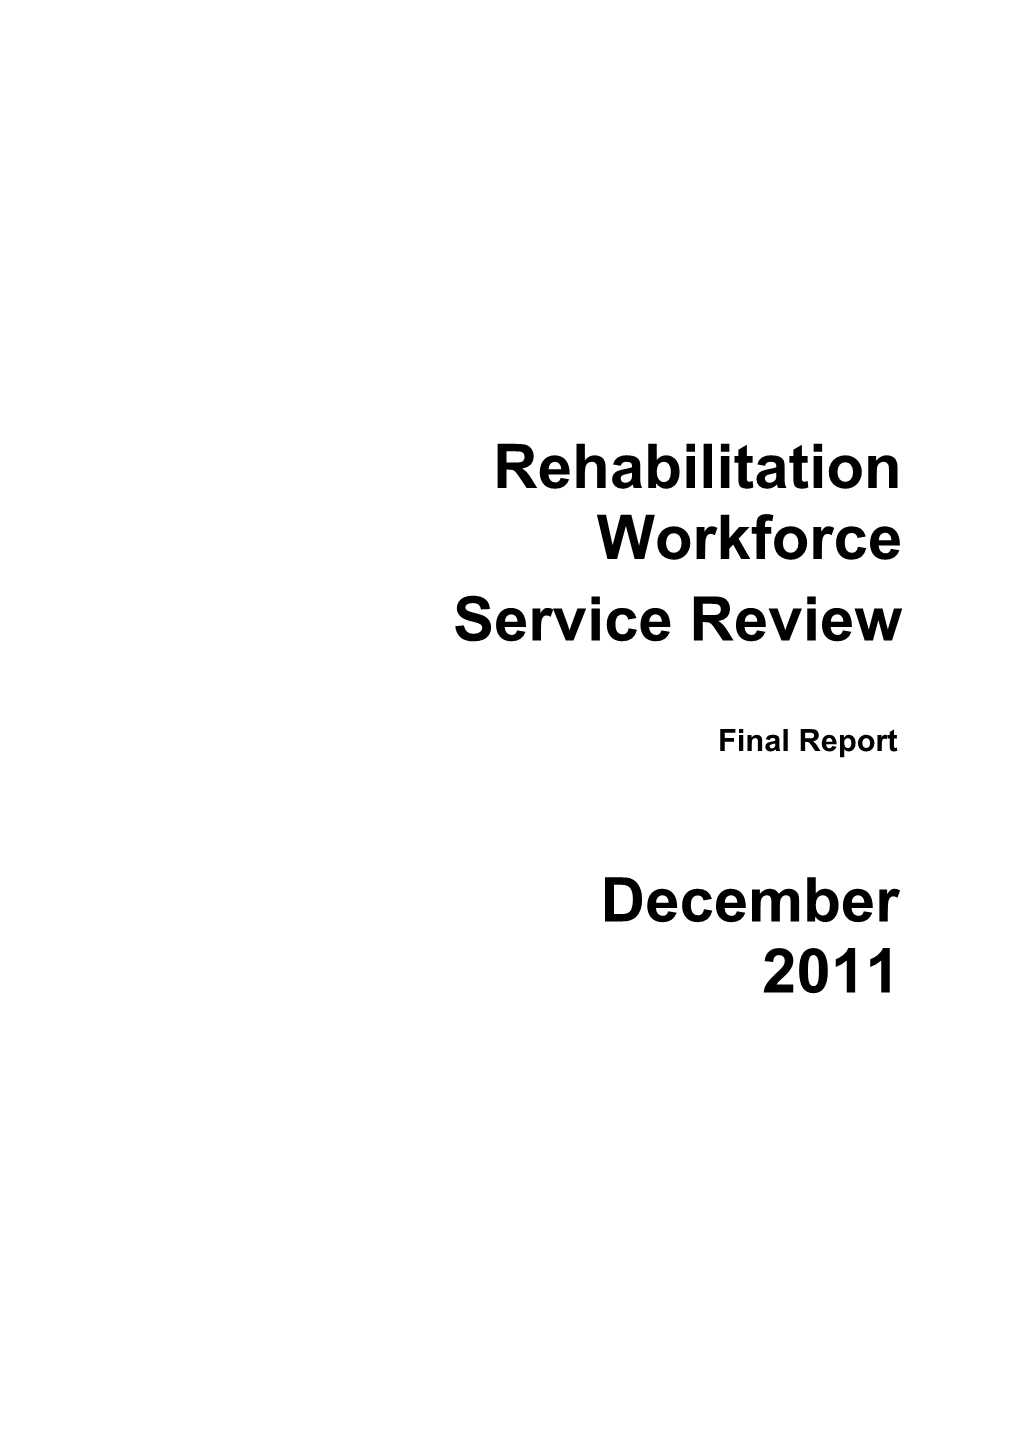 Rehabilitation Workforce Service Forecast